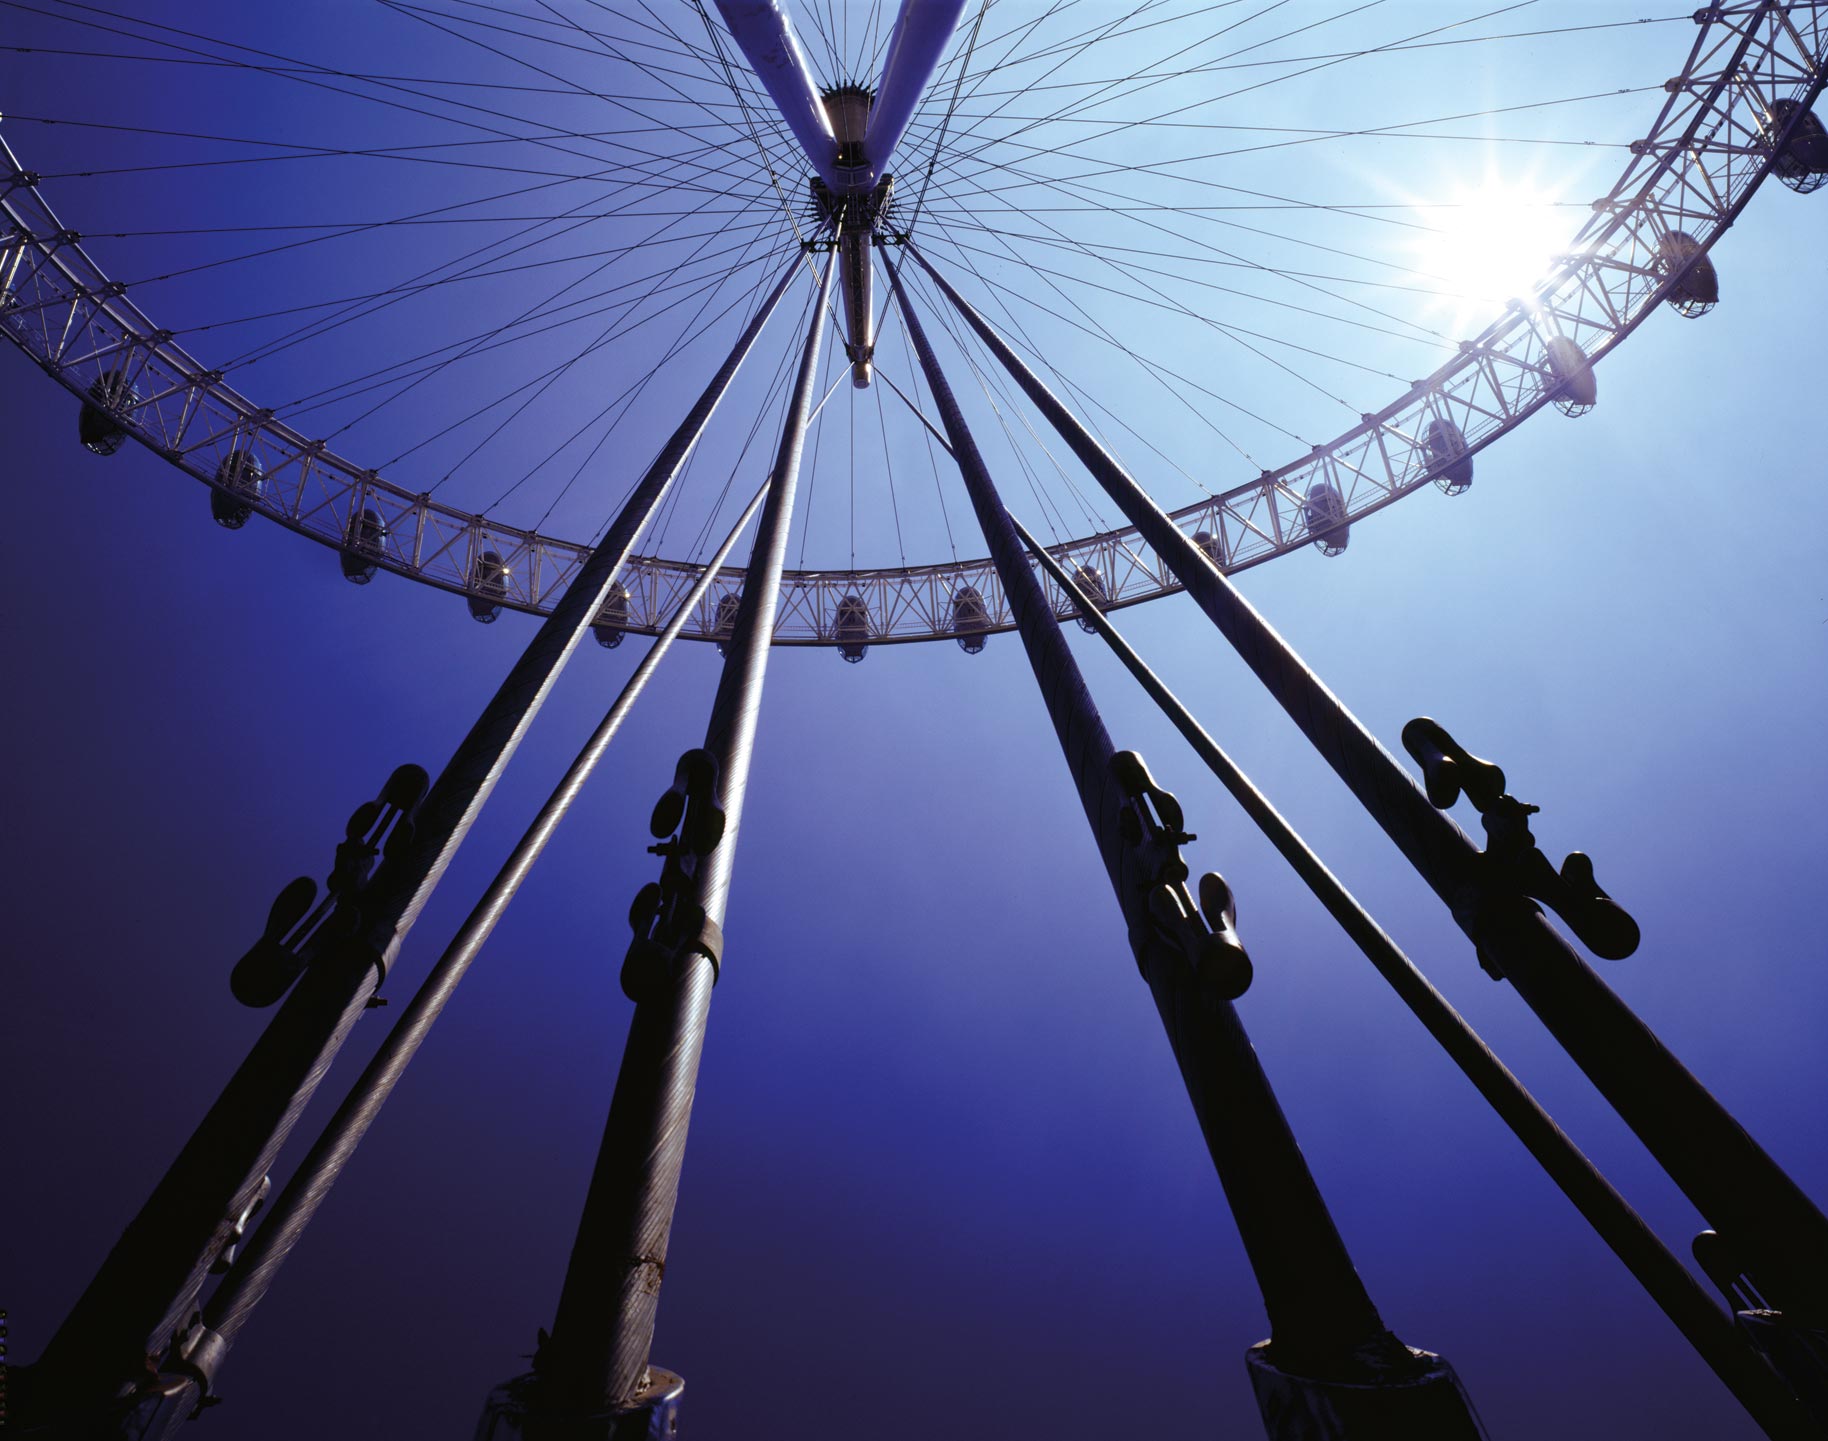 man made, ferris wheel, amusement park